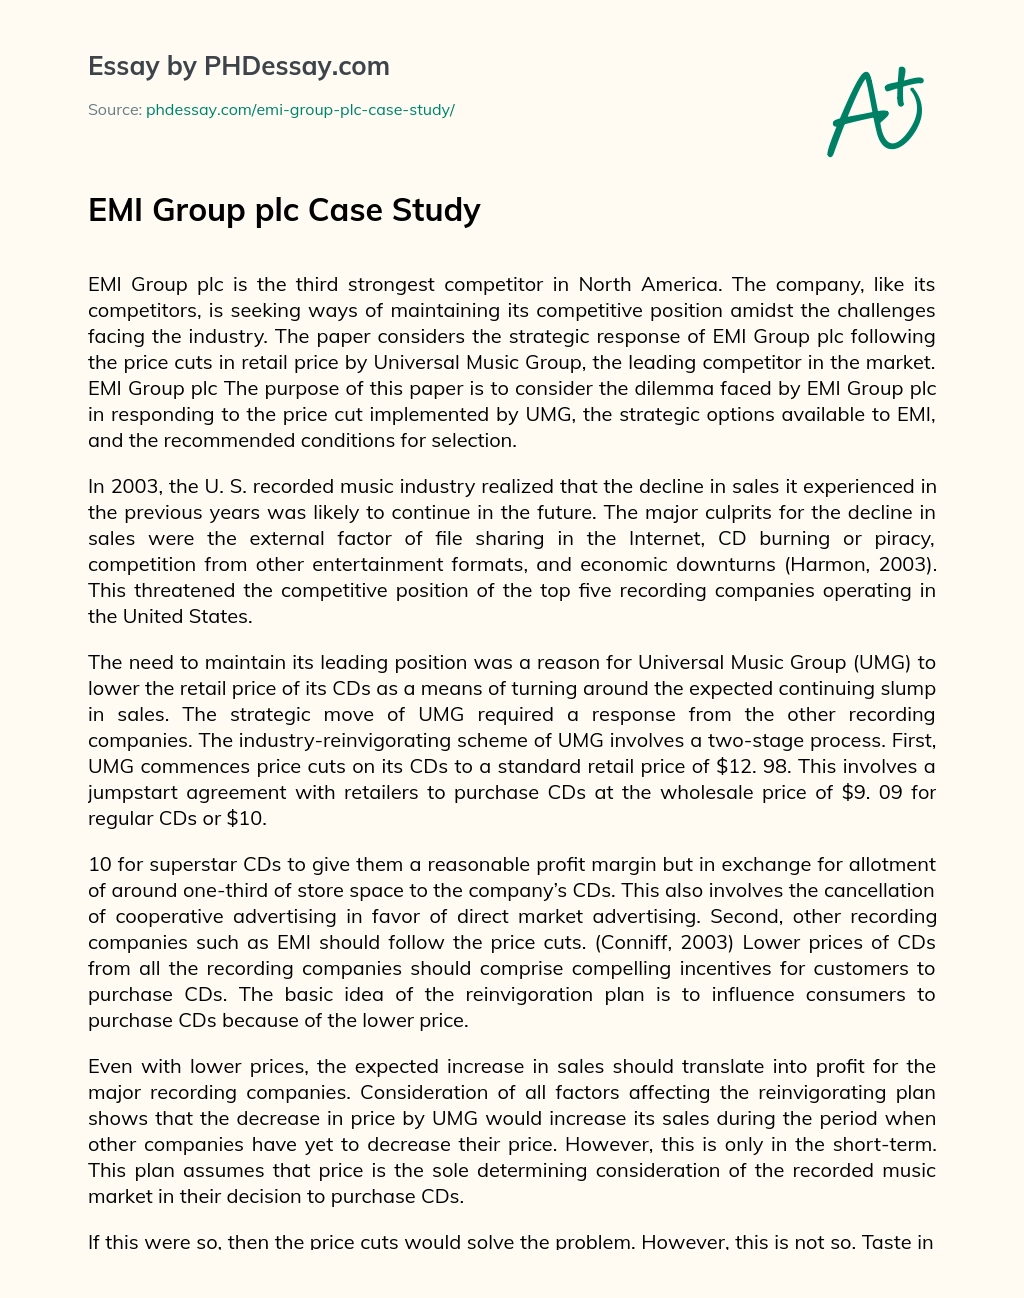 EMI Group plc Case Study essay